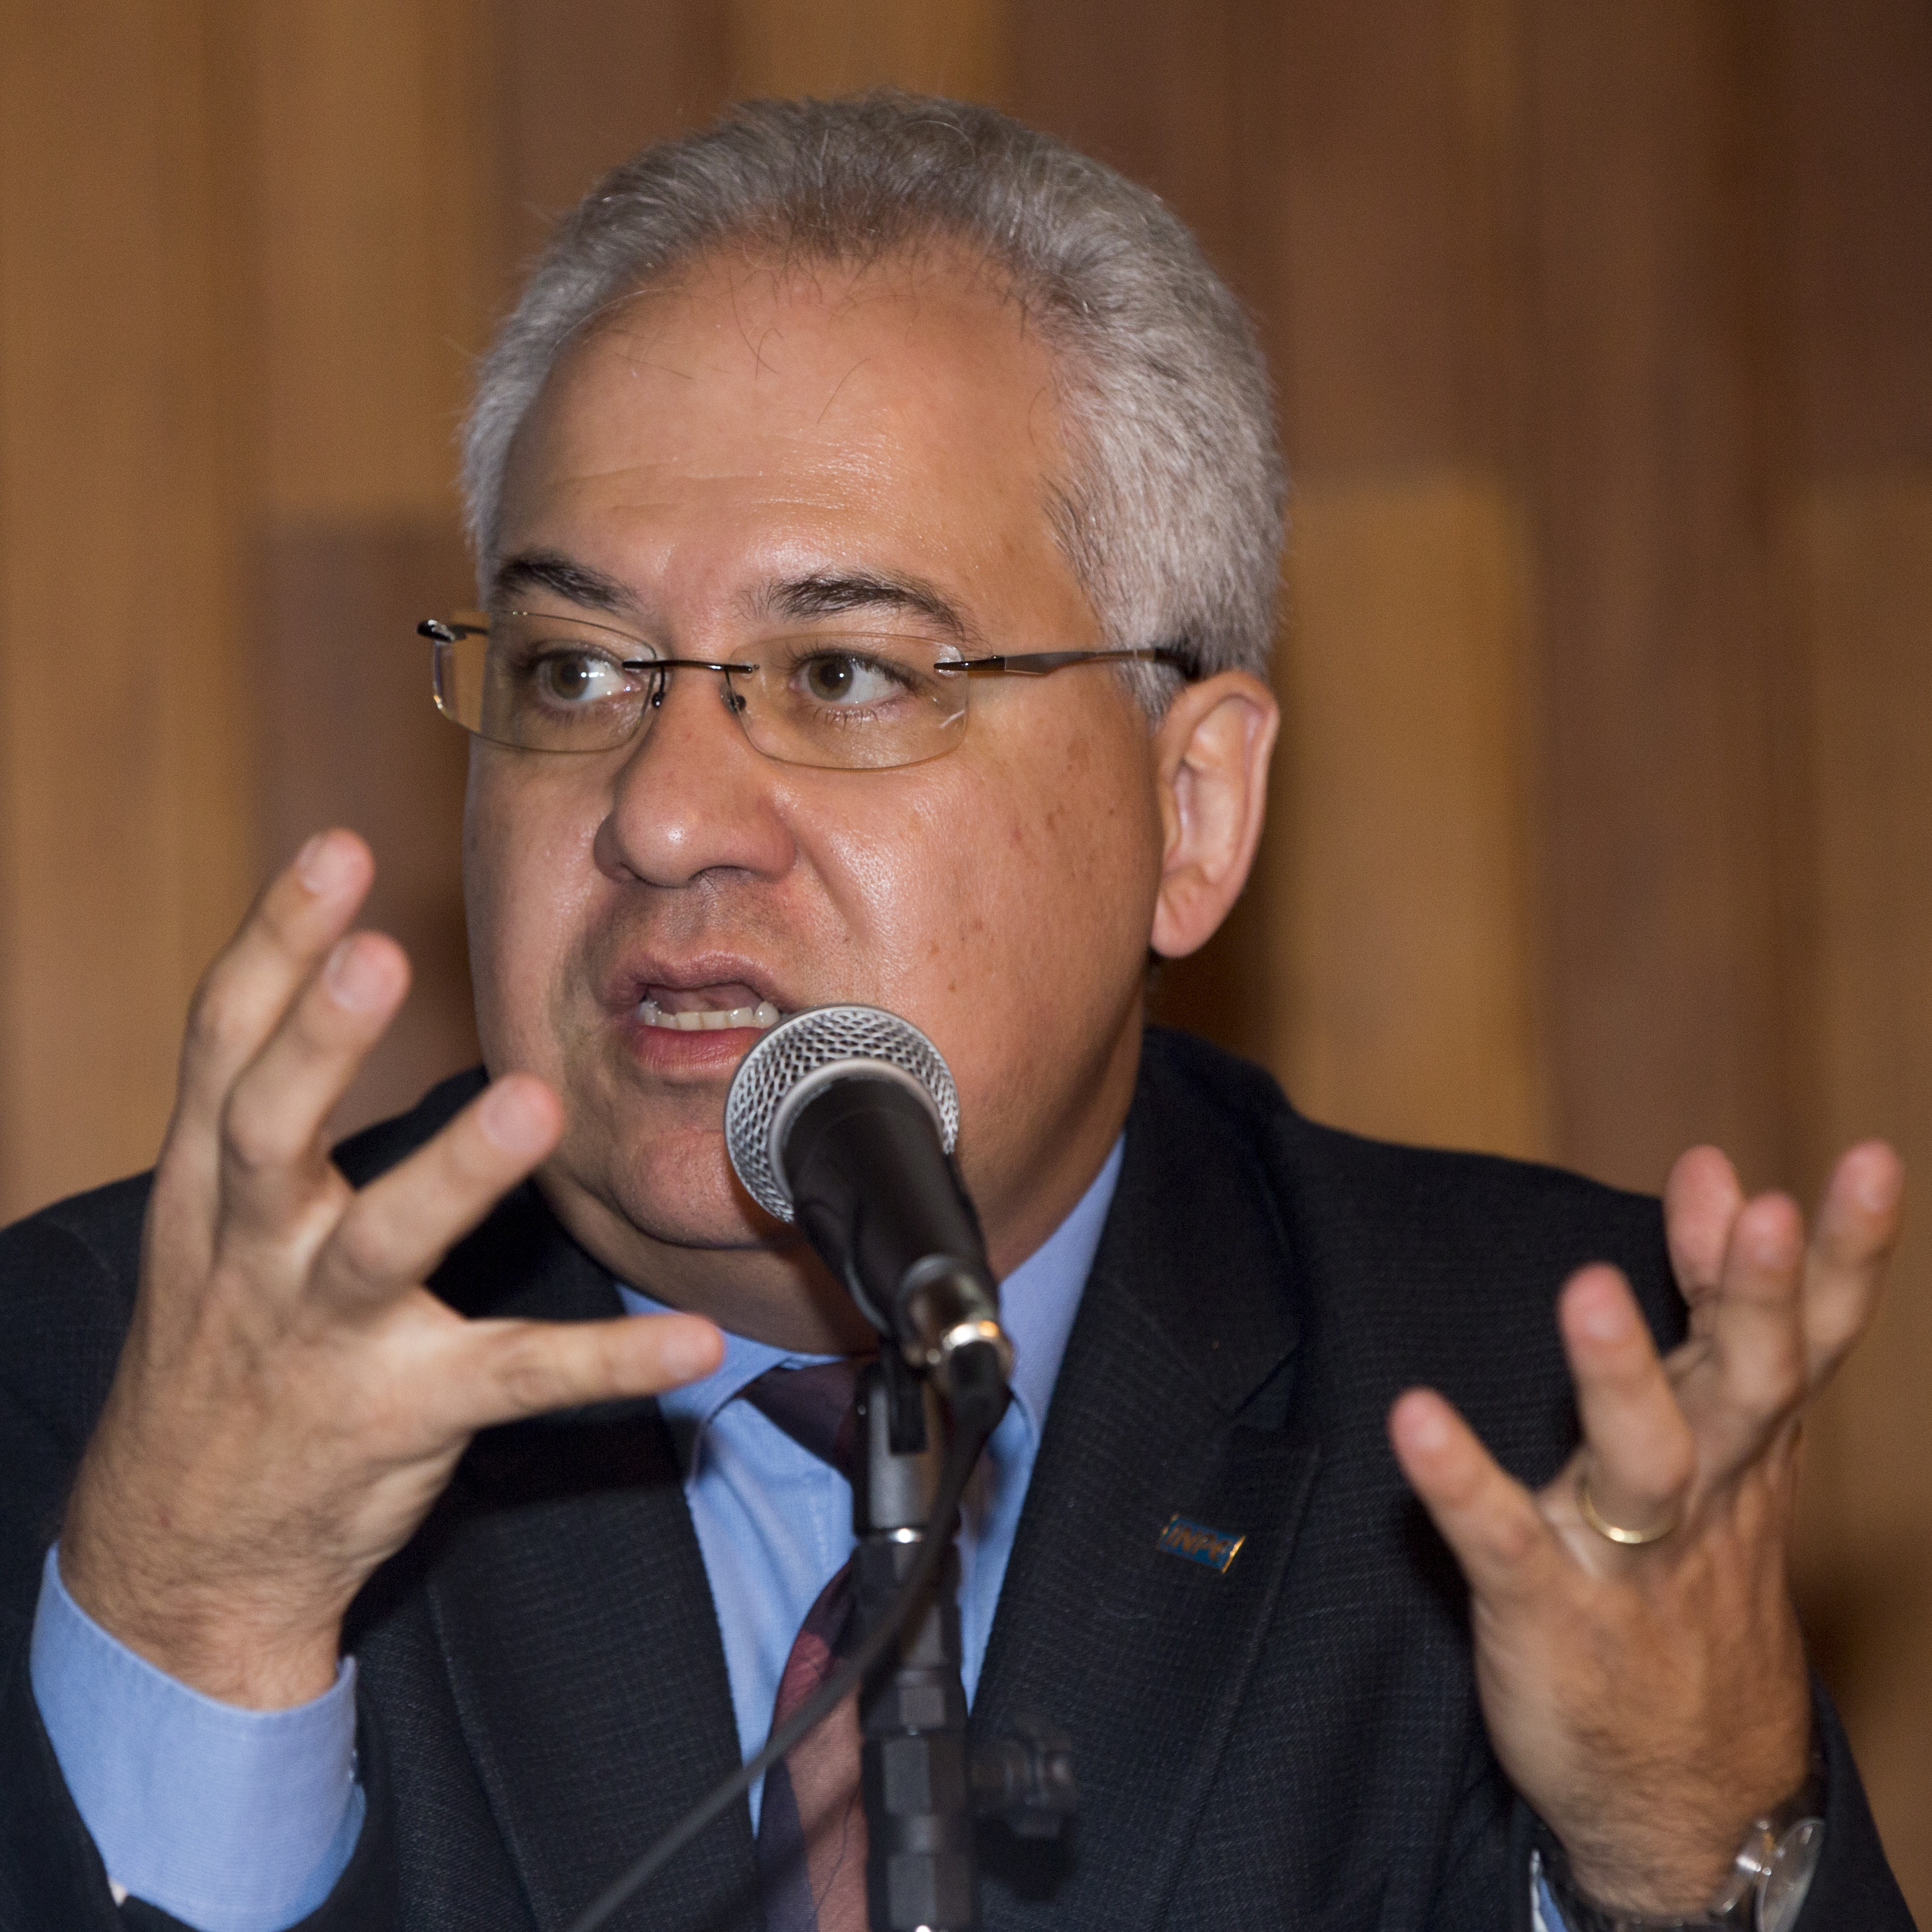 Sprecher der brasilianischen Seite, Professor Dr. Elbert E.N. Macau, Universidade de São Paulo, INPE